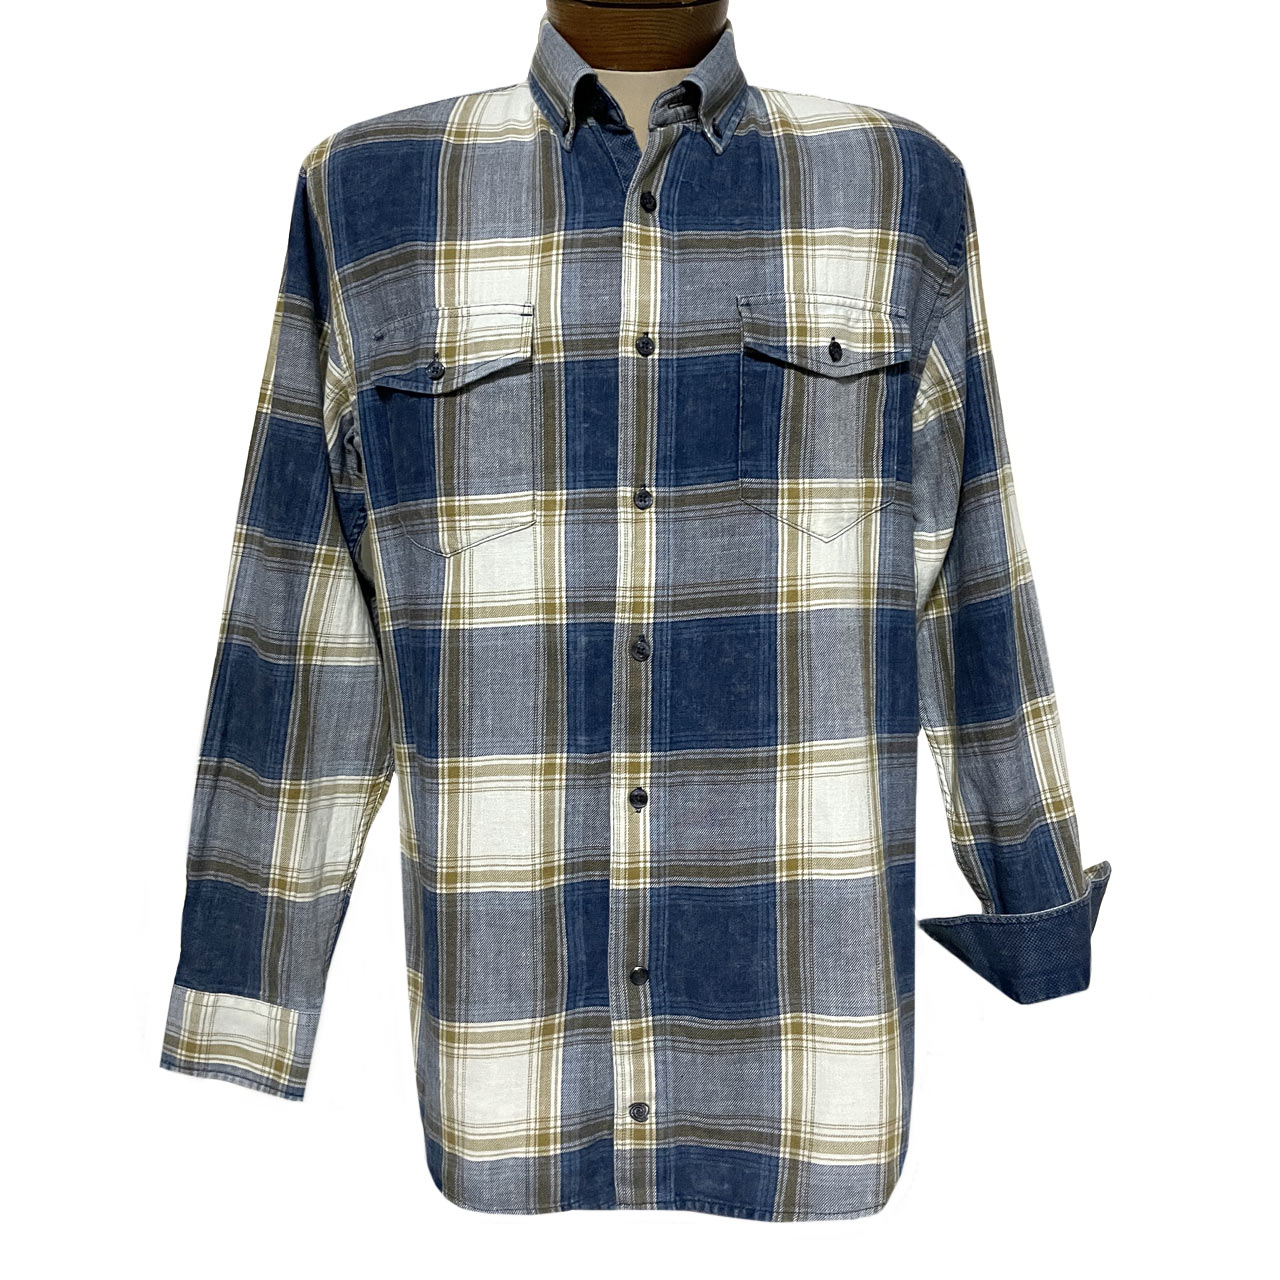 Men's F/X Fusion 100% Cotton Washed Plaid Long Sleeve Sport Shirt #C506 Tan/Indigo